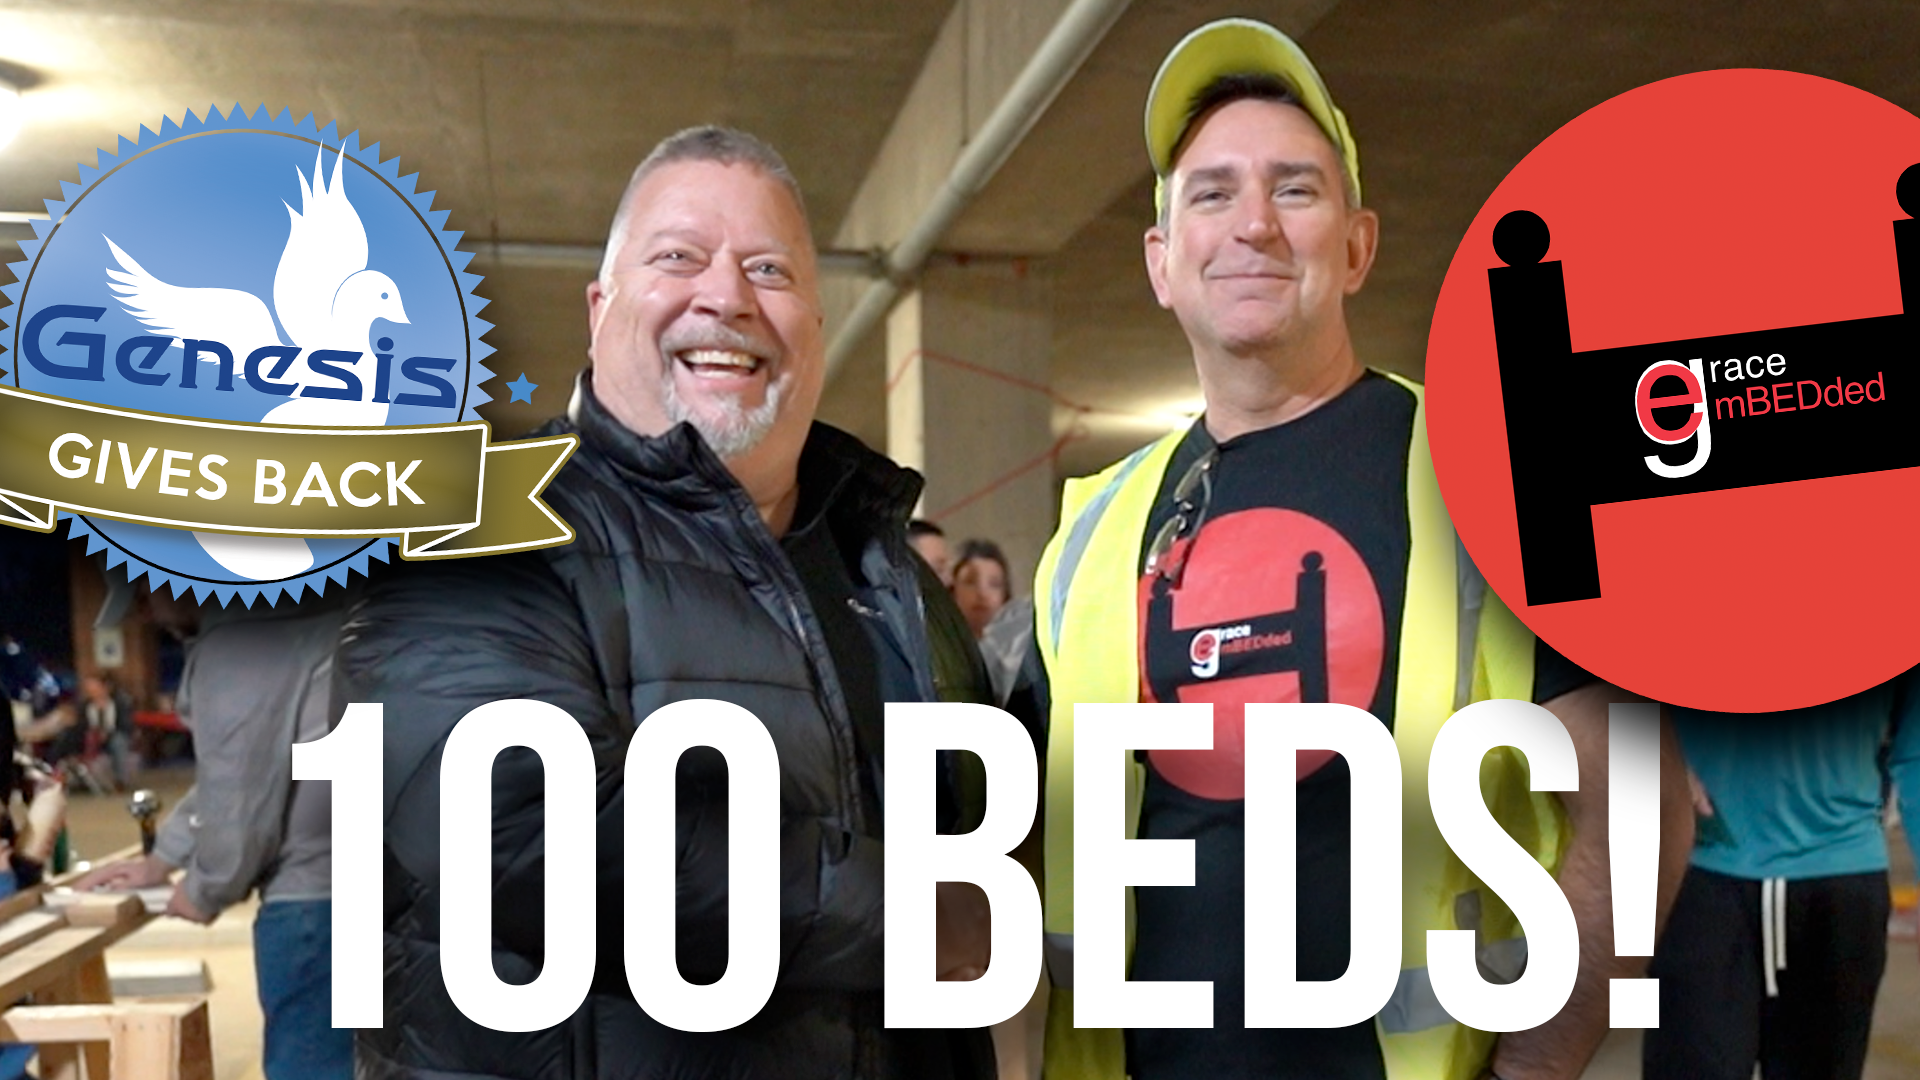 100 Bed Built! Genesis Gives Back: Grace EmBEDded Thanksgiving Bed Build